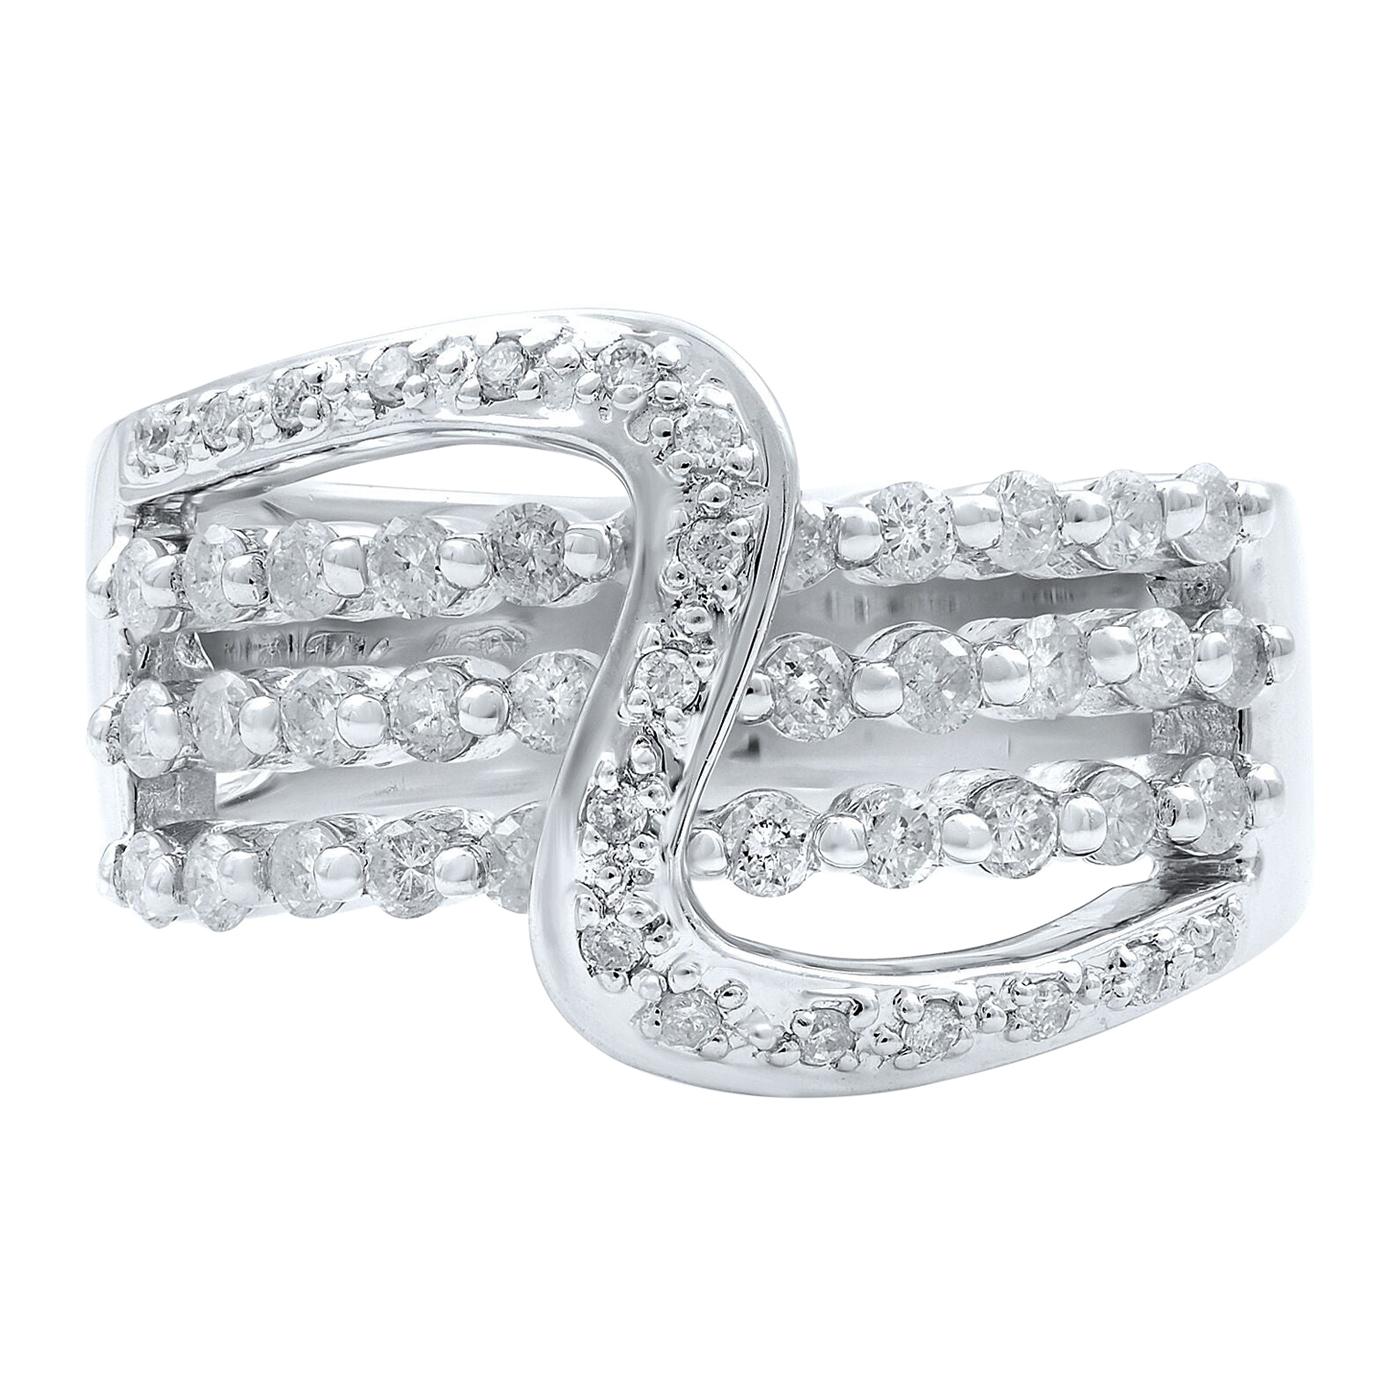 Rachel Koen Diamond Ladies Ring 14K White Gold 0.75 Cttw Size 7.5 For Sale